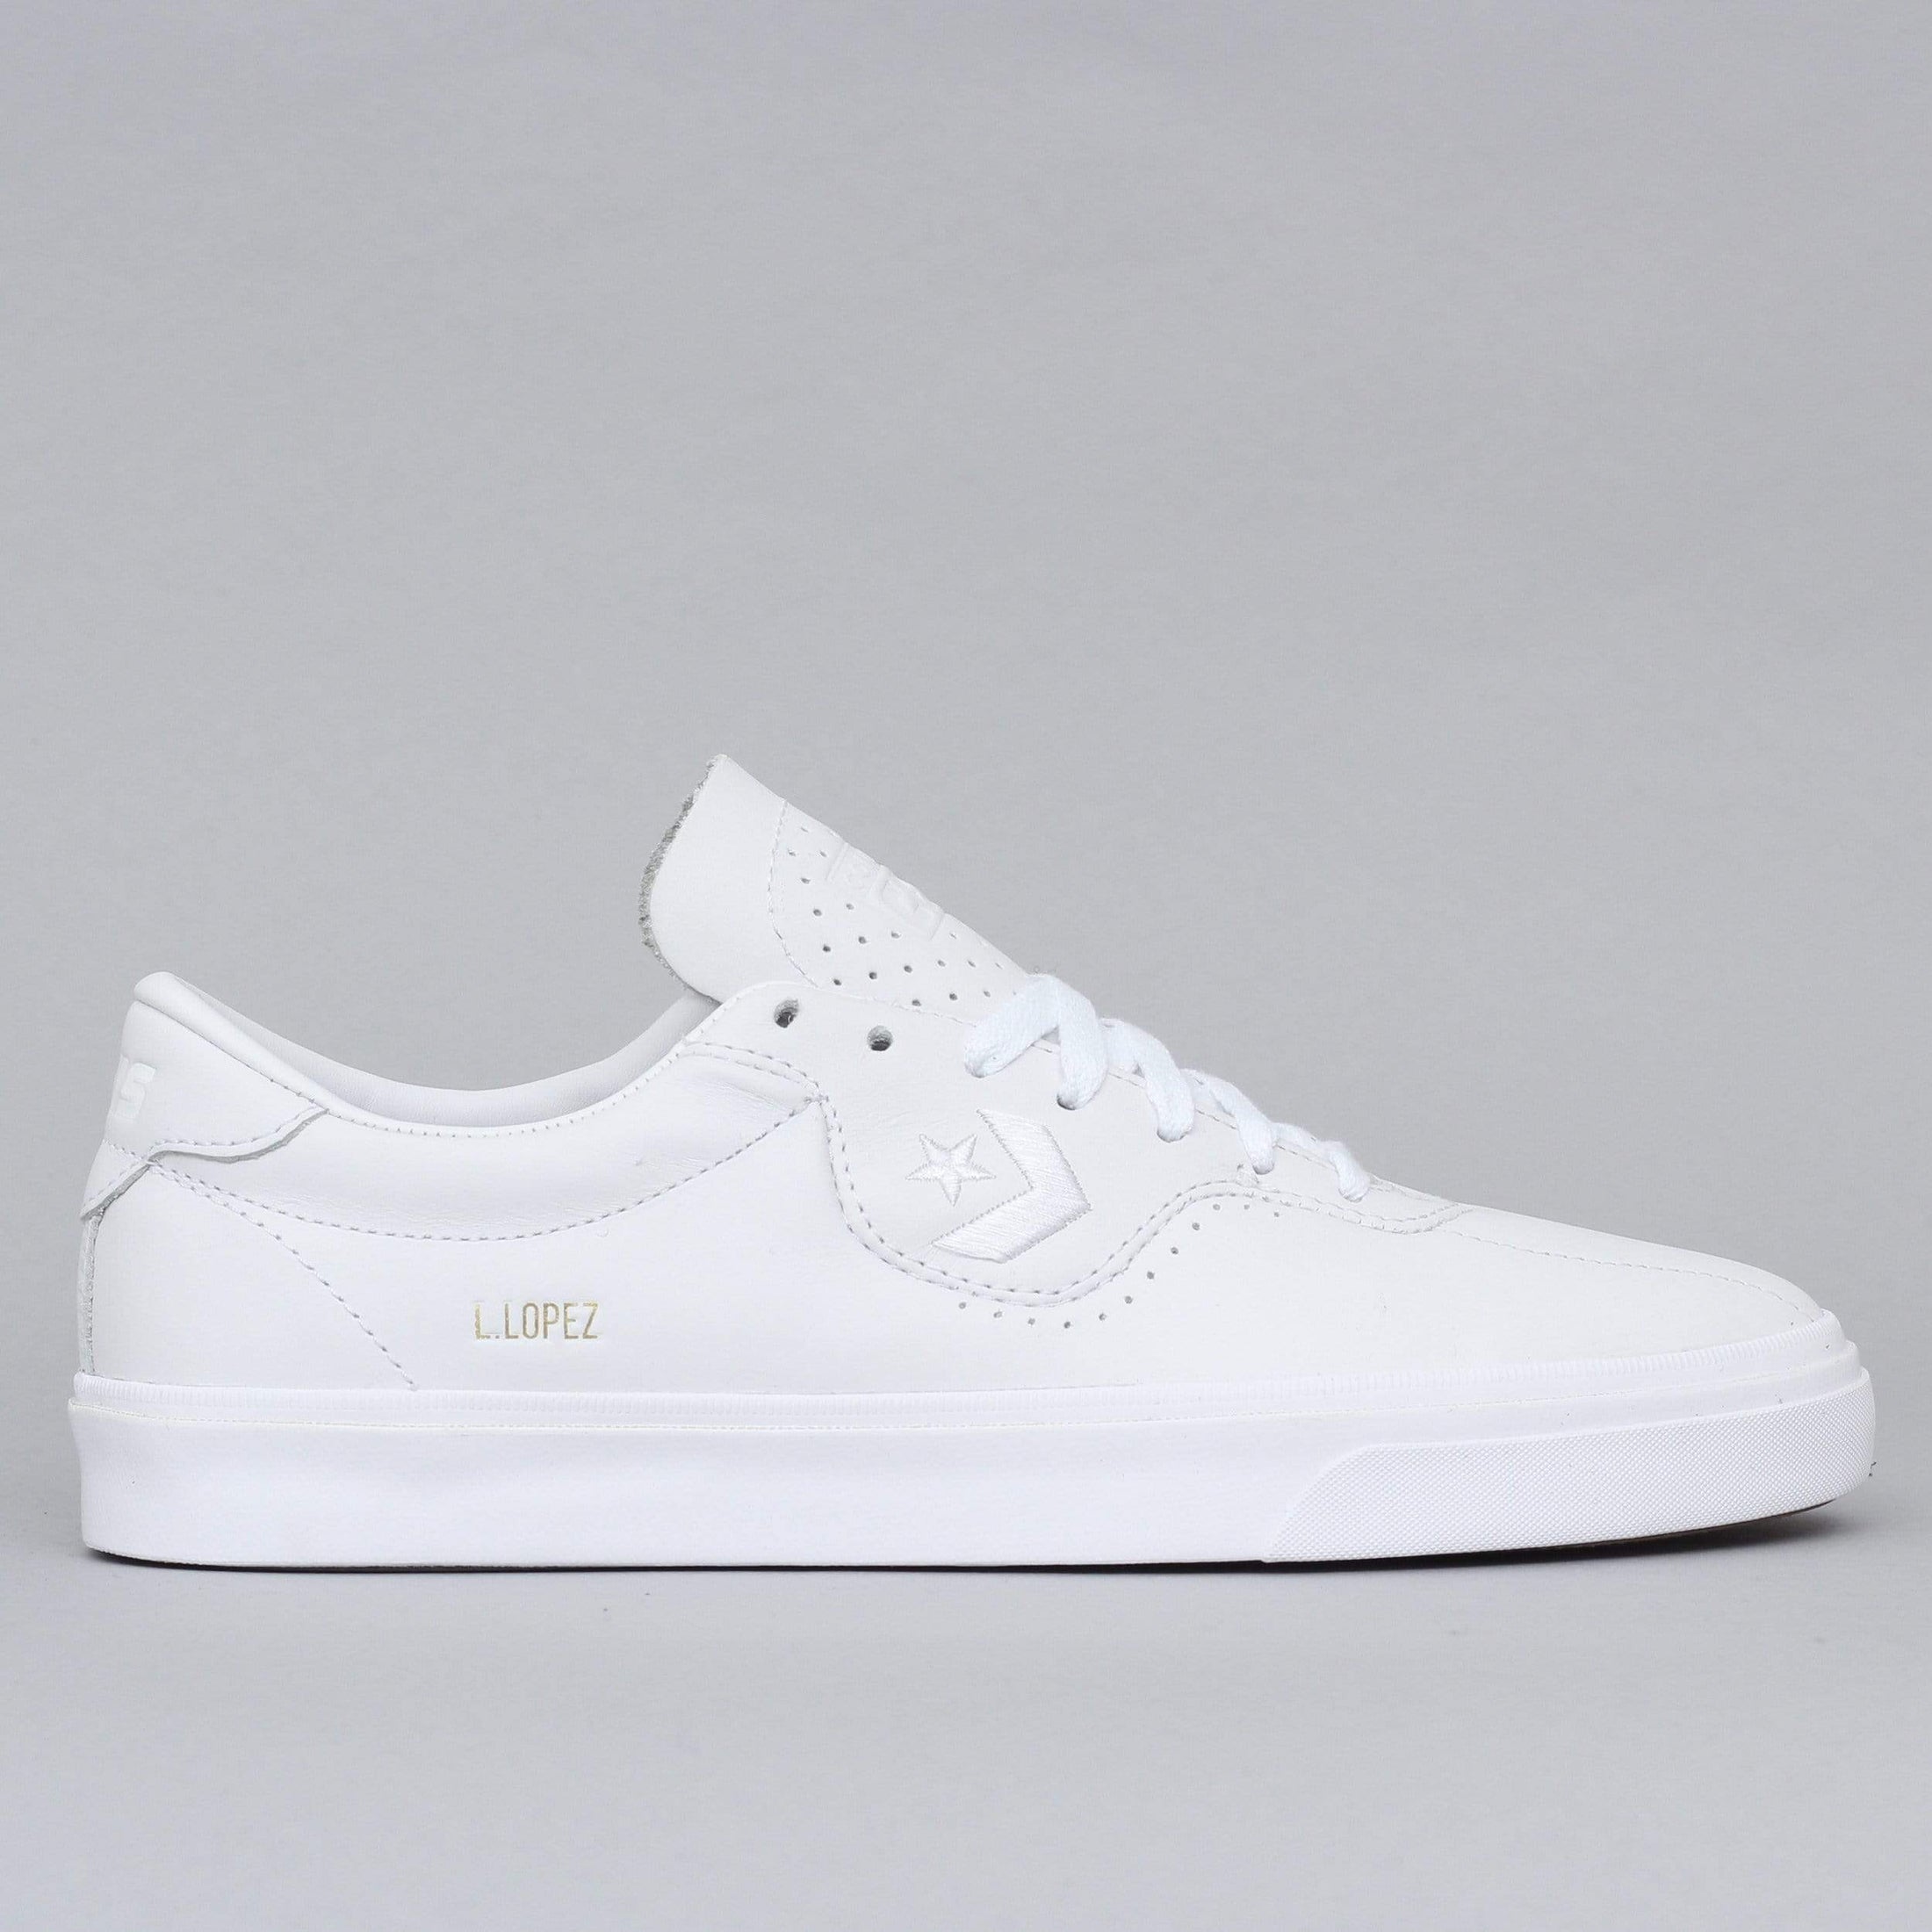 Converse Louie Lopez Pro Leather OX Shoes White / White / White